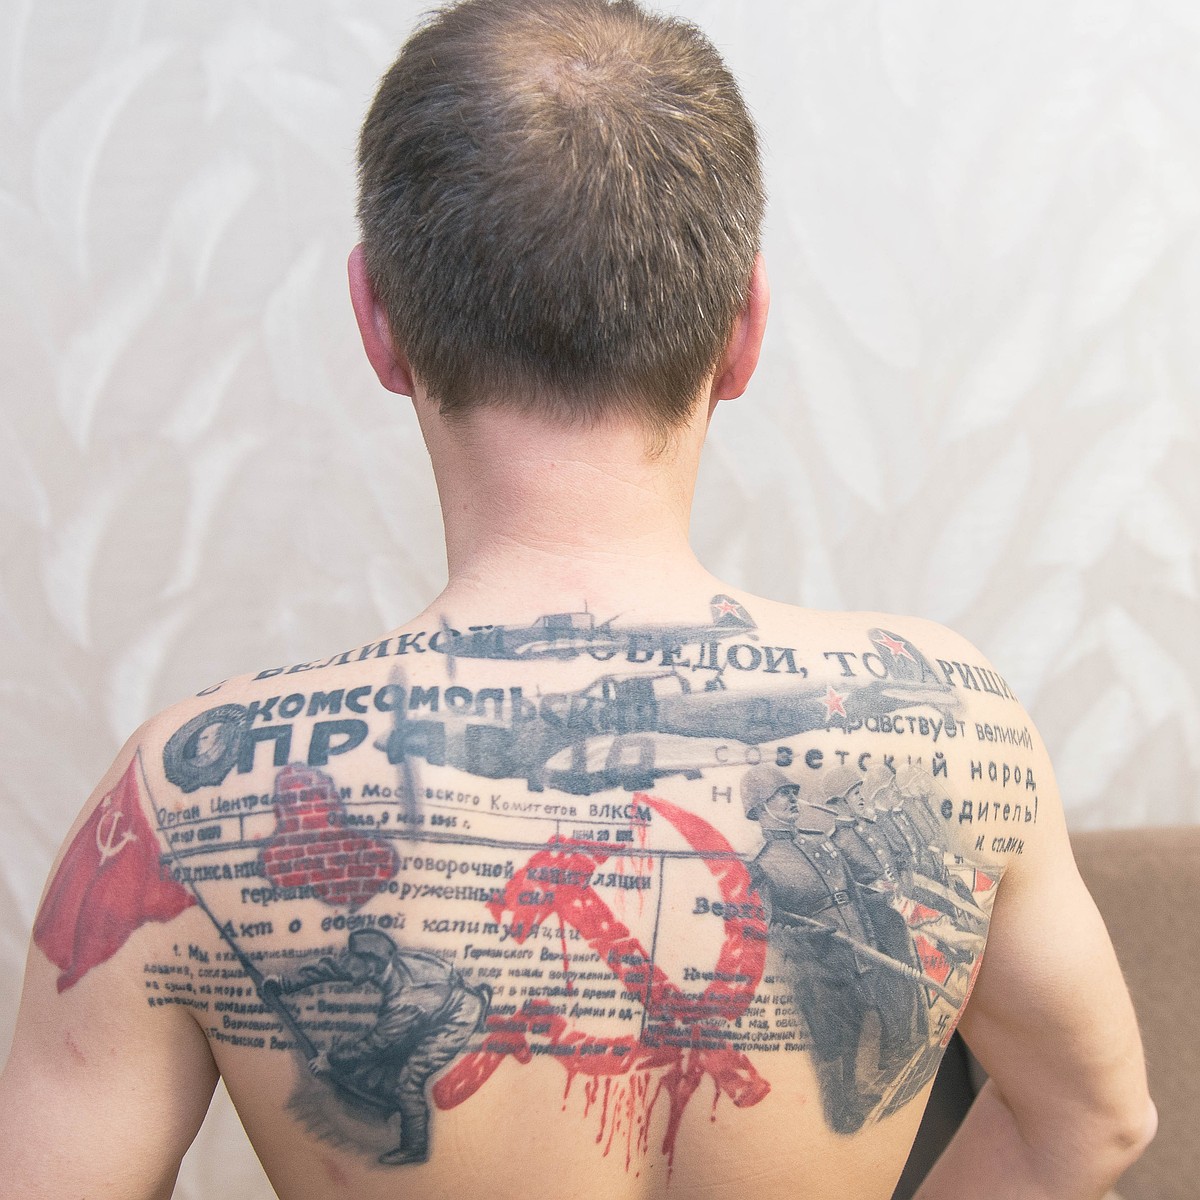 Почему советские зэки били себе татуировки с нацистскими мотивами